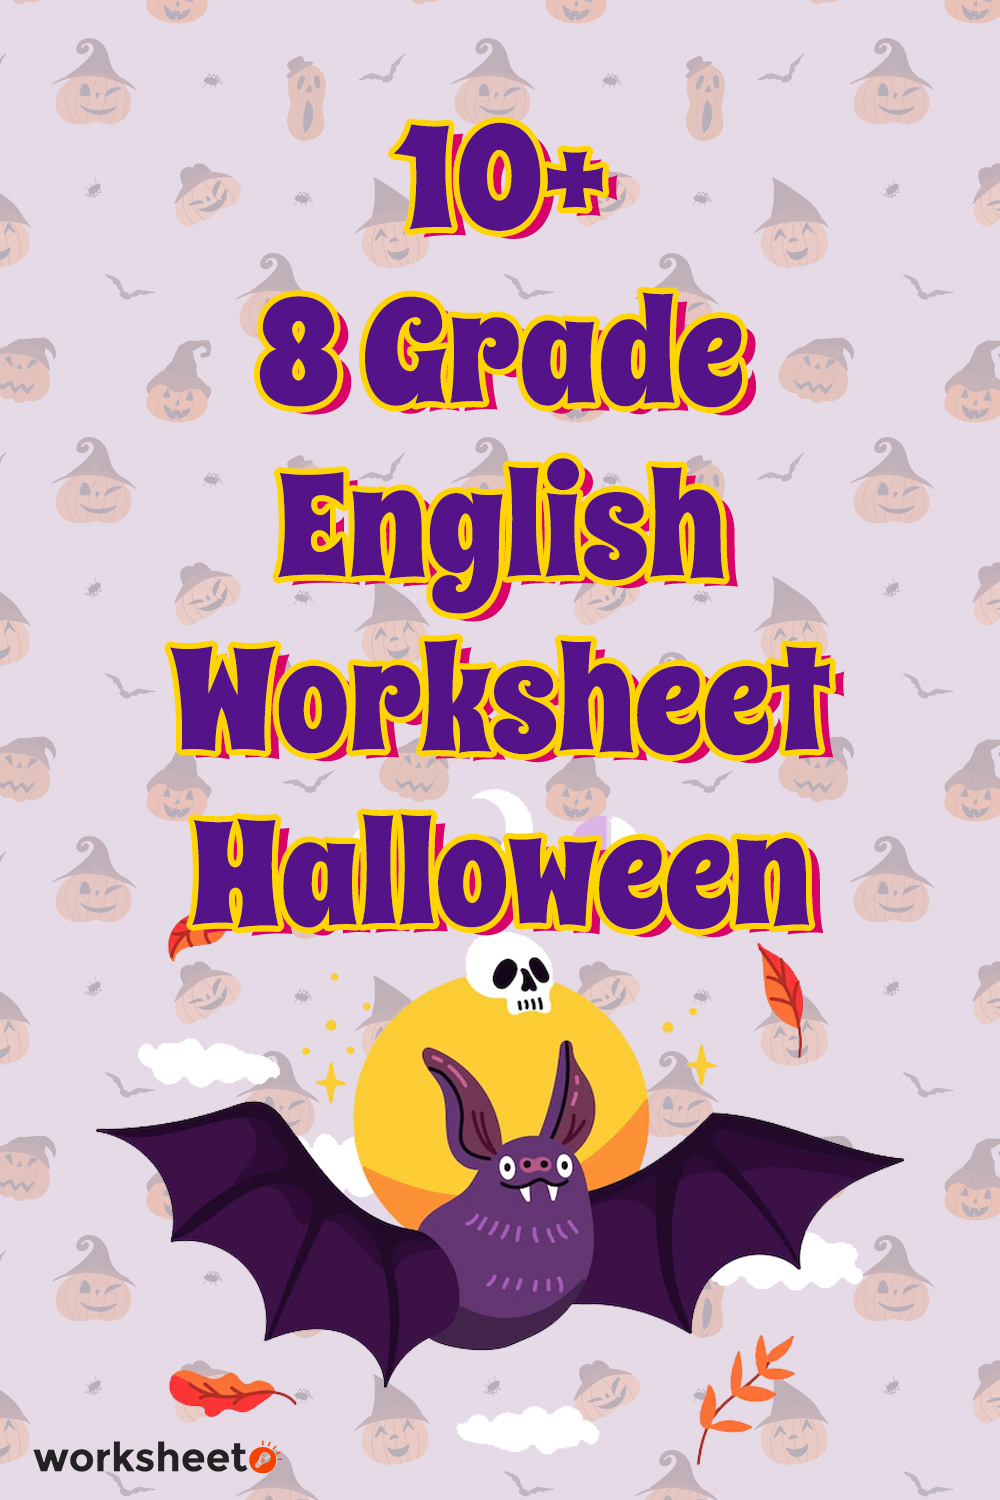 12 Images of 8 Grade English Worksheet Halloween